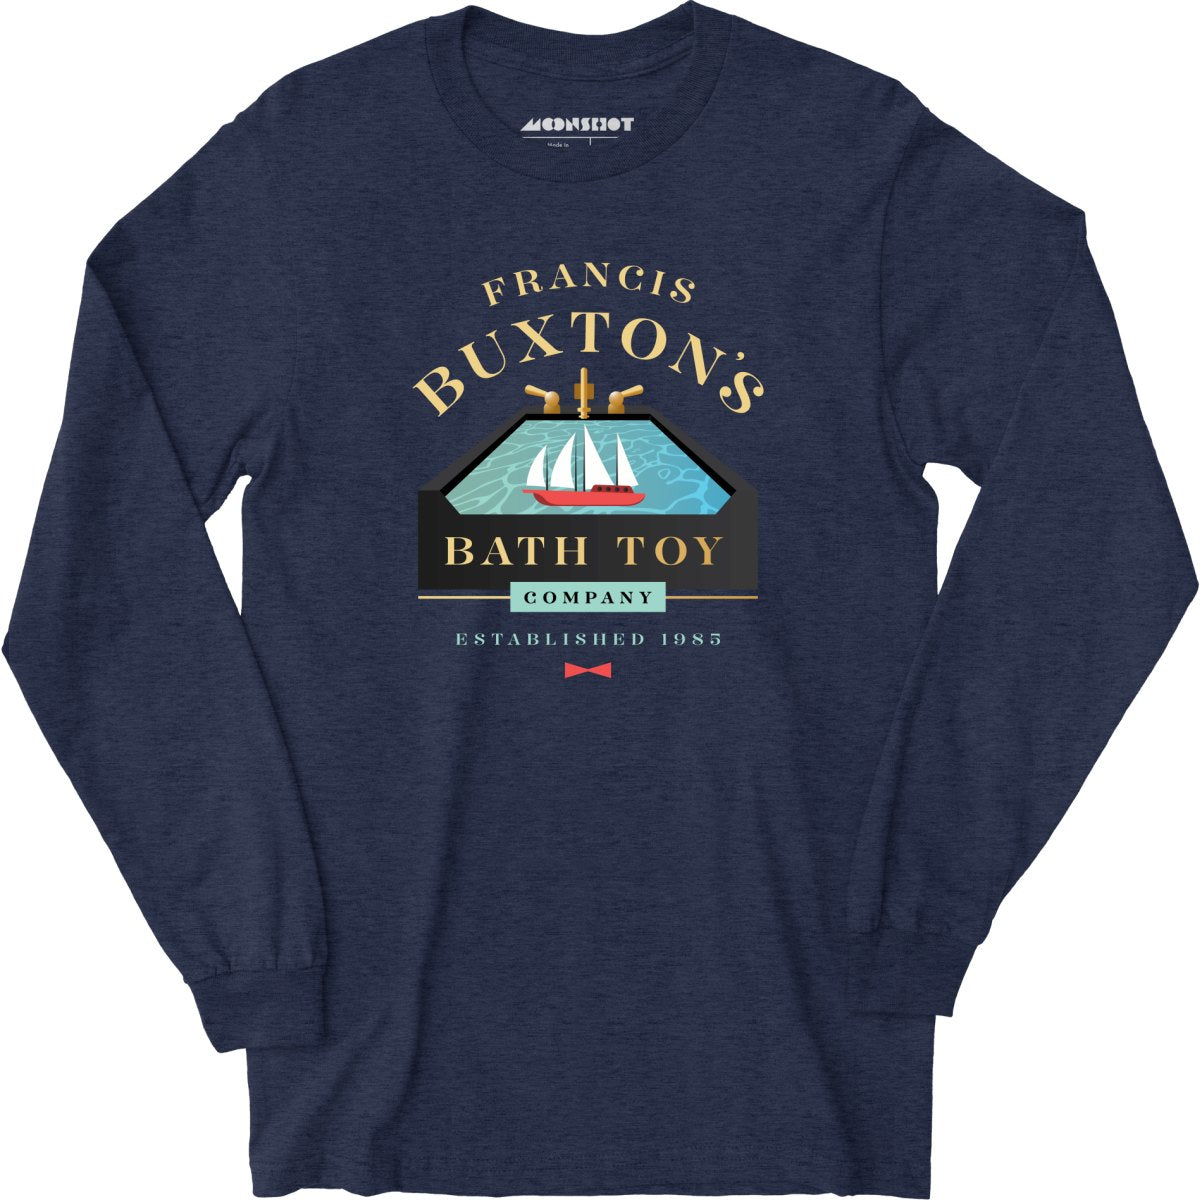 Francis Buxton's Bath Toy Company - Long Sleeve T-Shirt